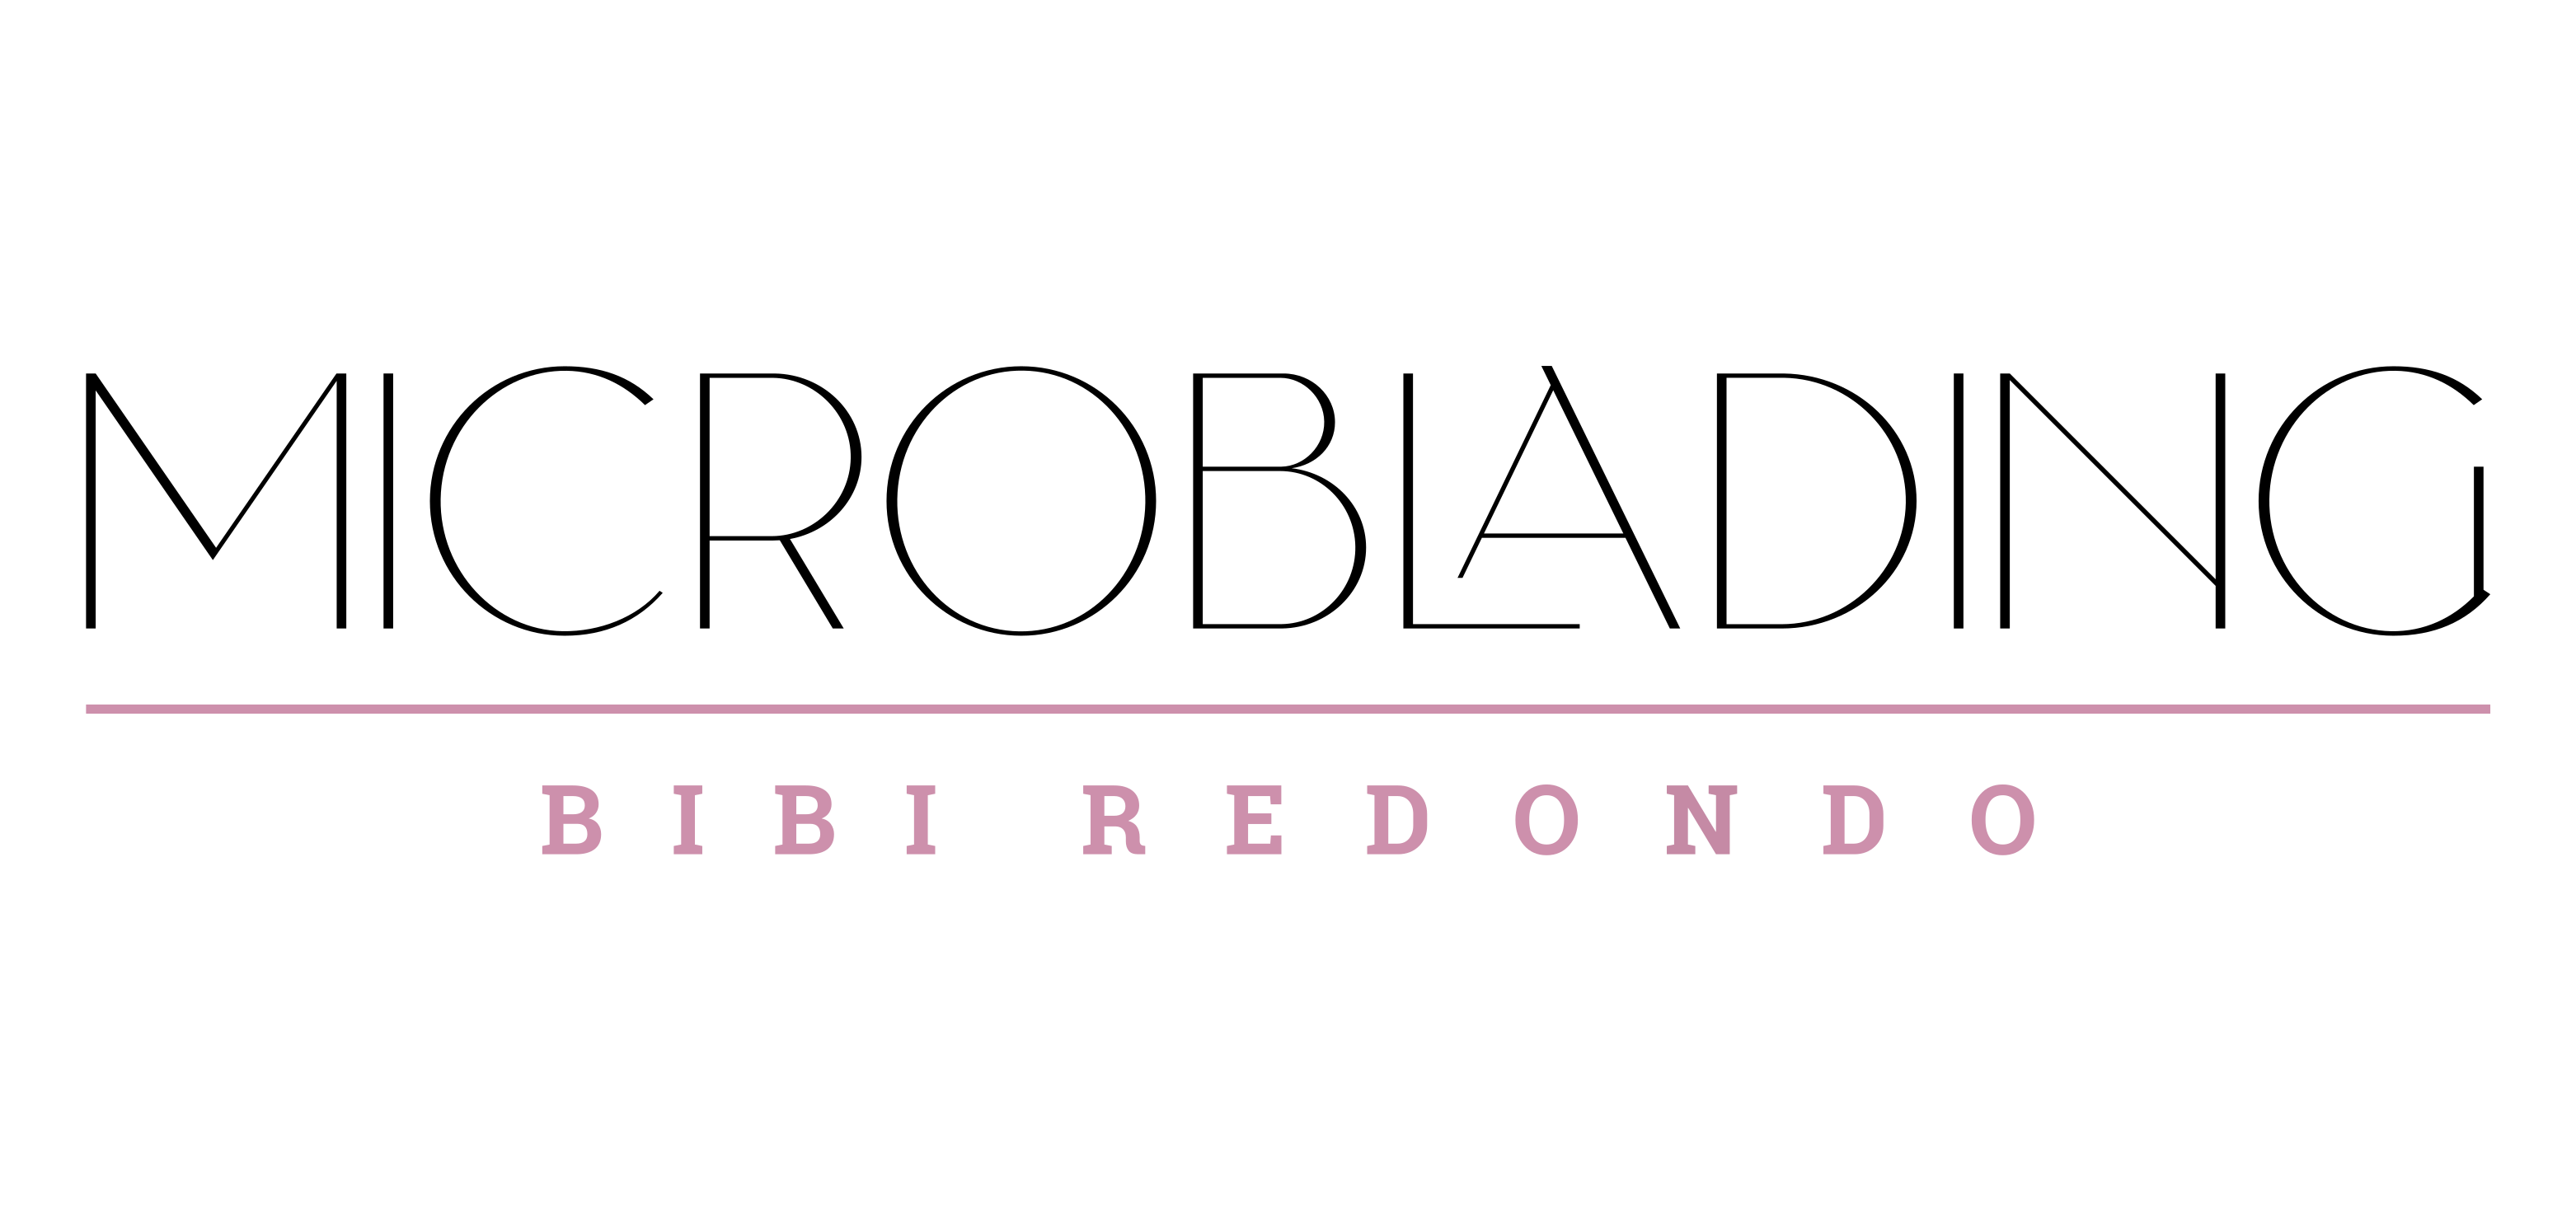 Bibi Redondo Microblading